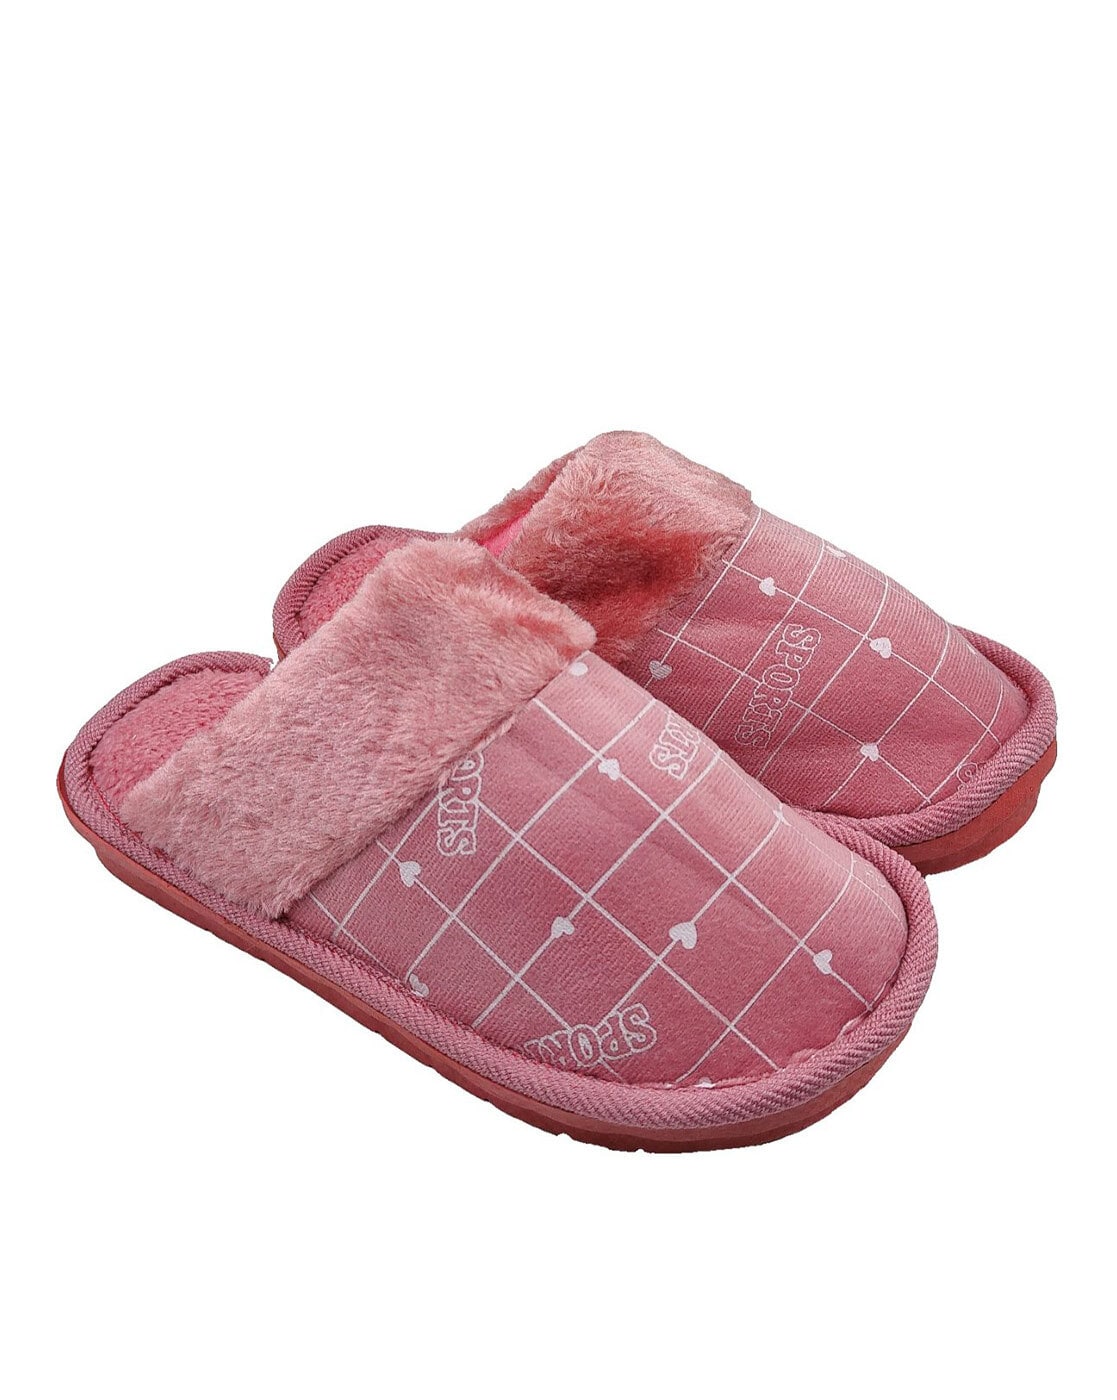 TopiBaaz Kids Winter Slippers For Unisex Child  Cute Cartoon Stylish  Design Soft Plush Cotton Slide Fur Warm Flip Flops House Indoor Slipper   Chappal For Girls  Boy rukhpink115years  Amazonin